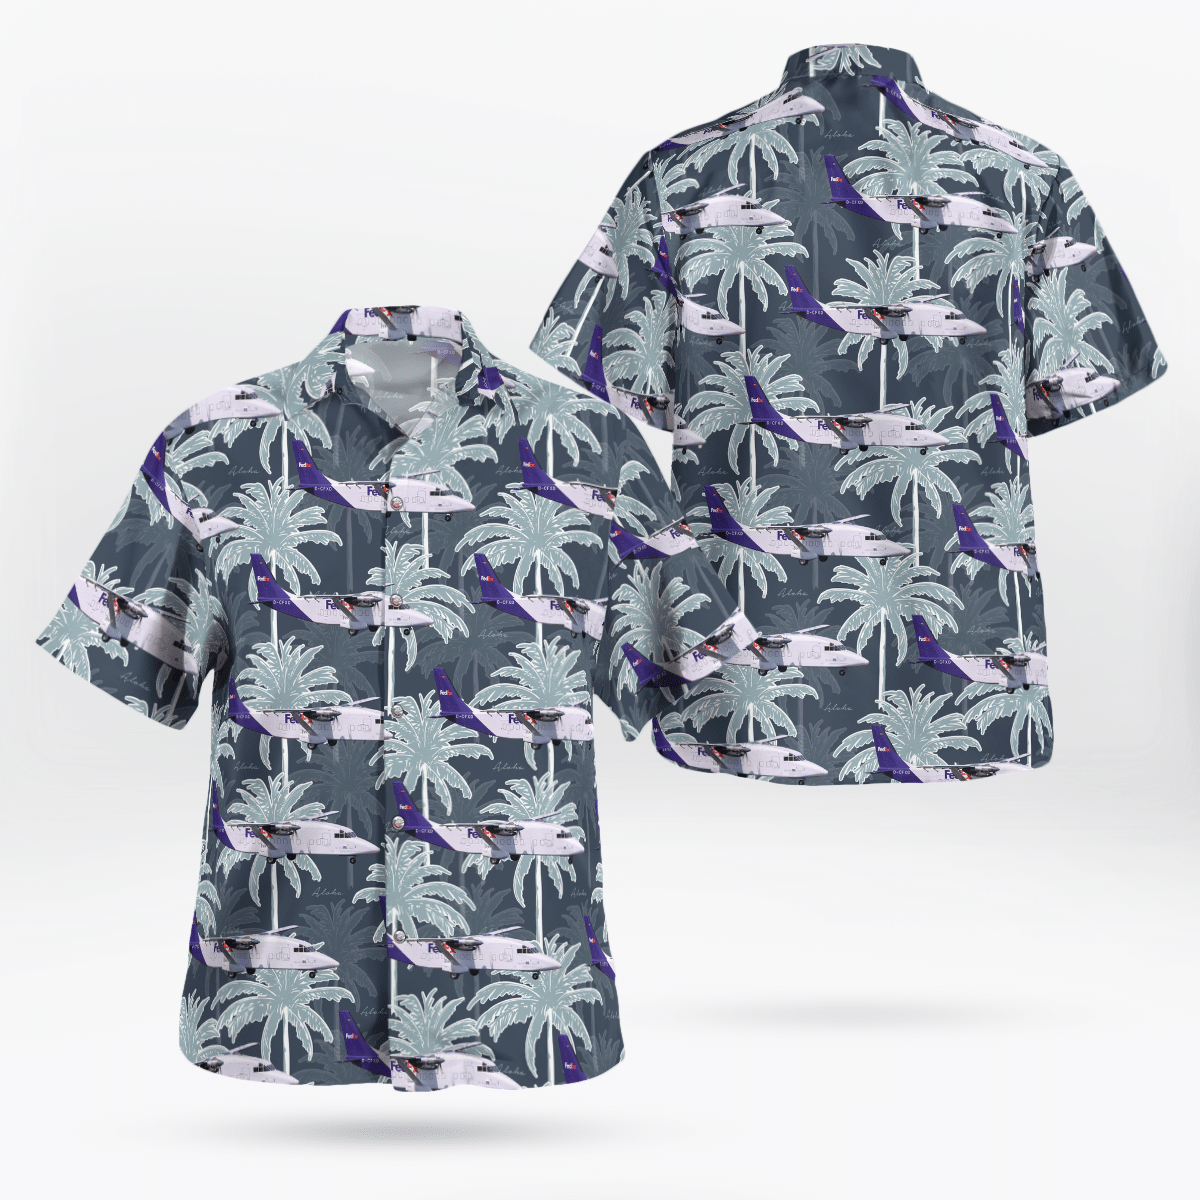 Summer so cool with top new hawaiian shirt below 251